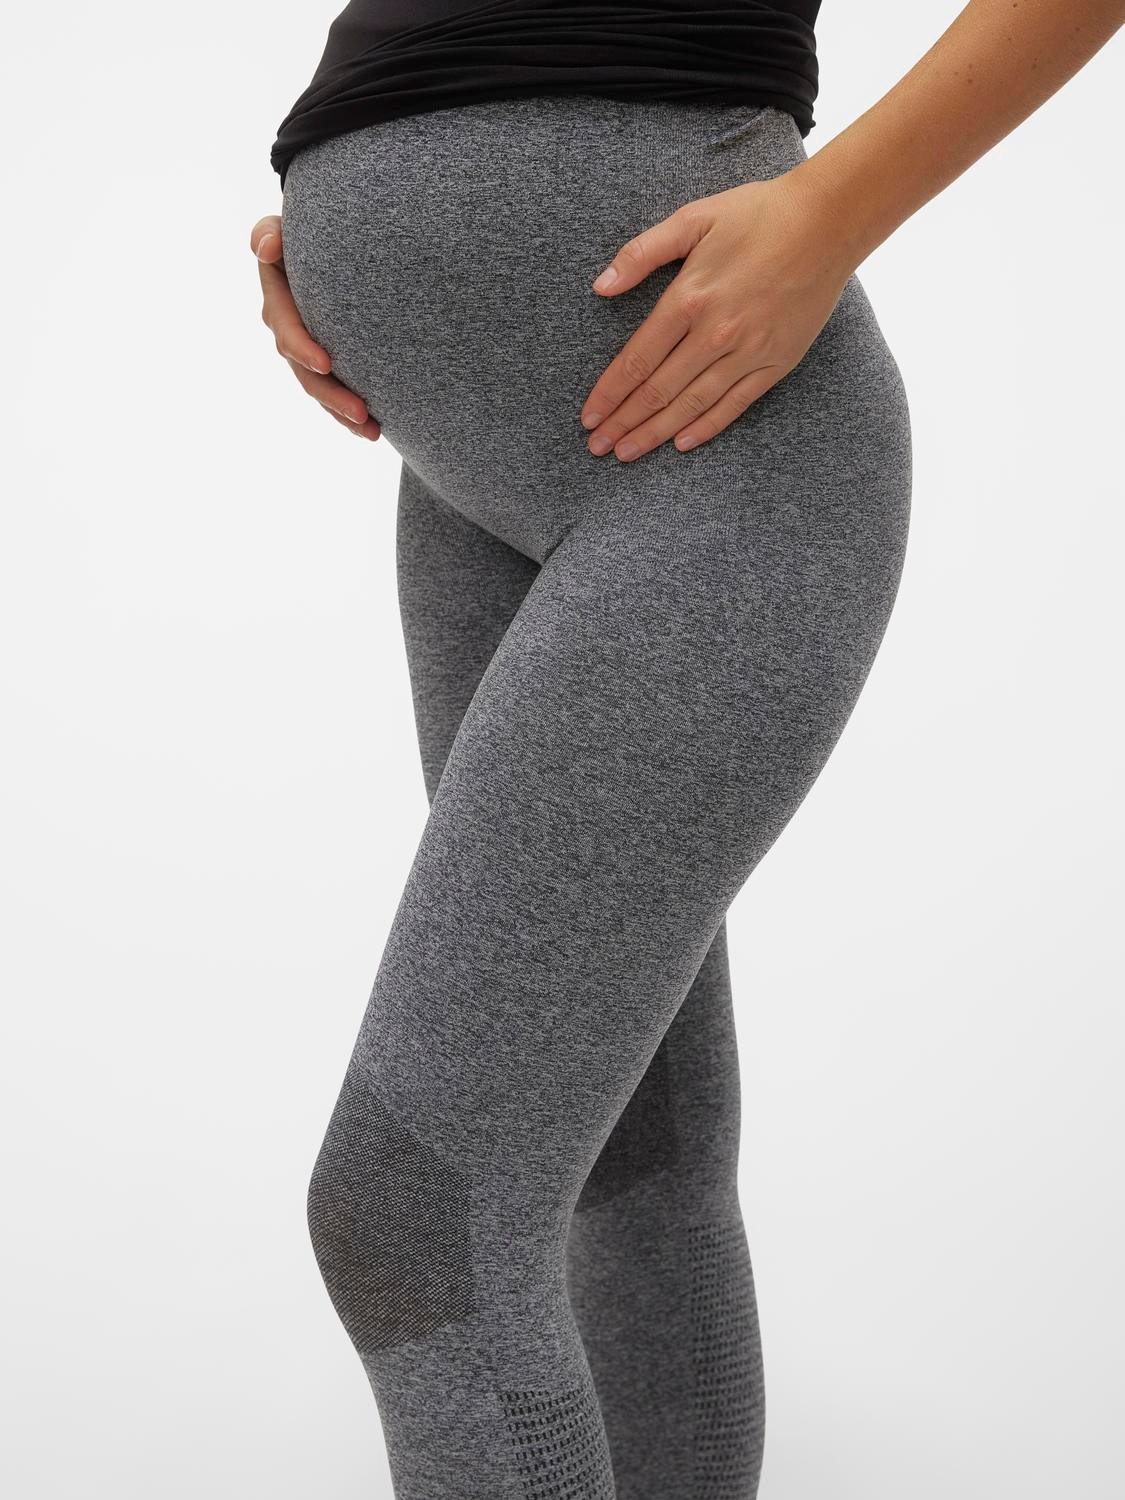 Mamasana Studio Luxe High Waist Maternity Leggings In Grey Thunder